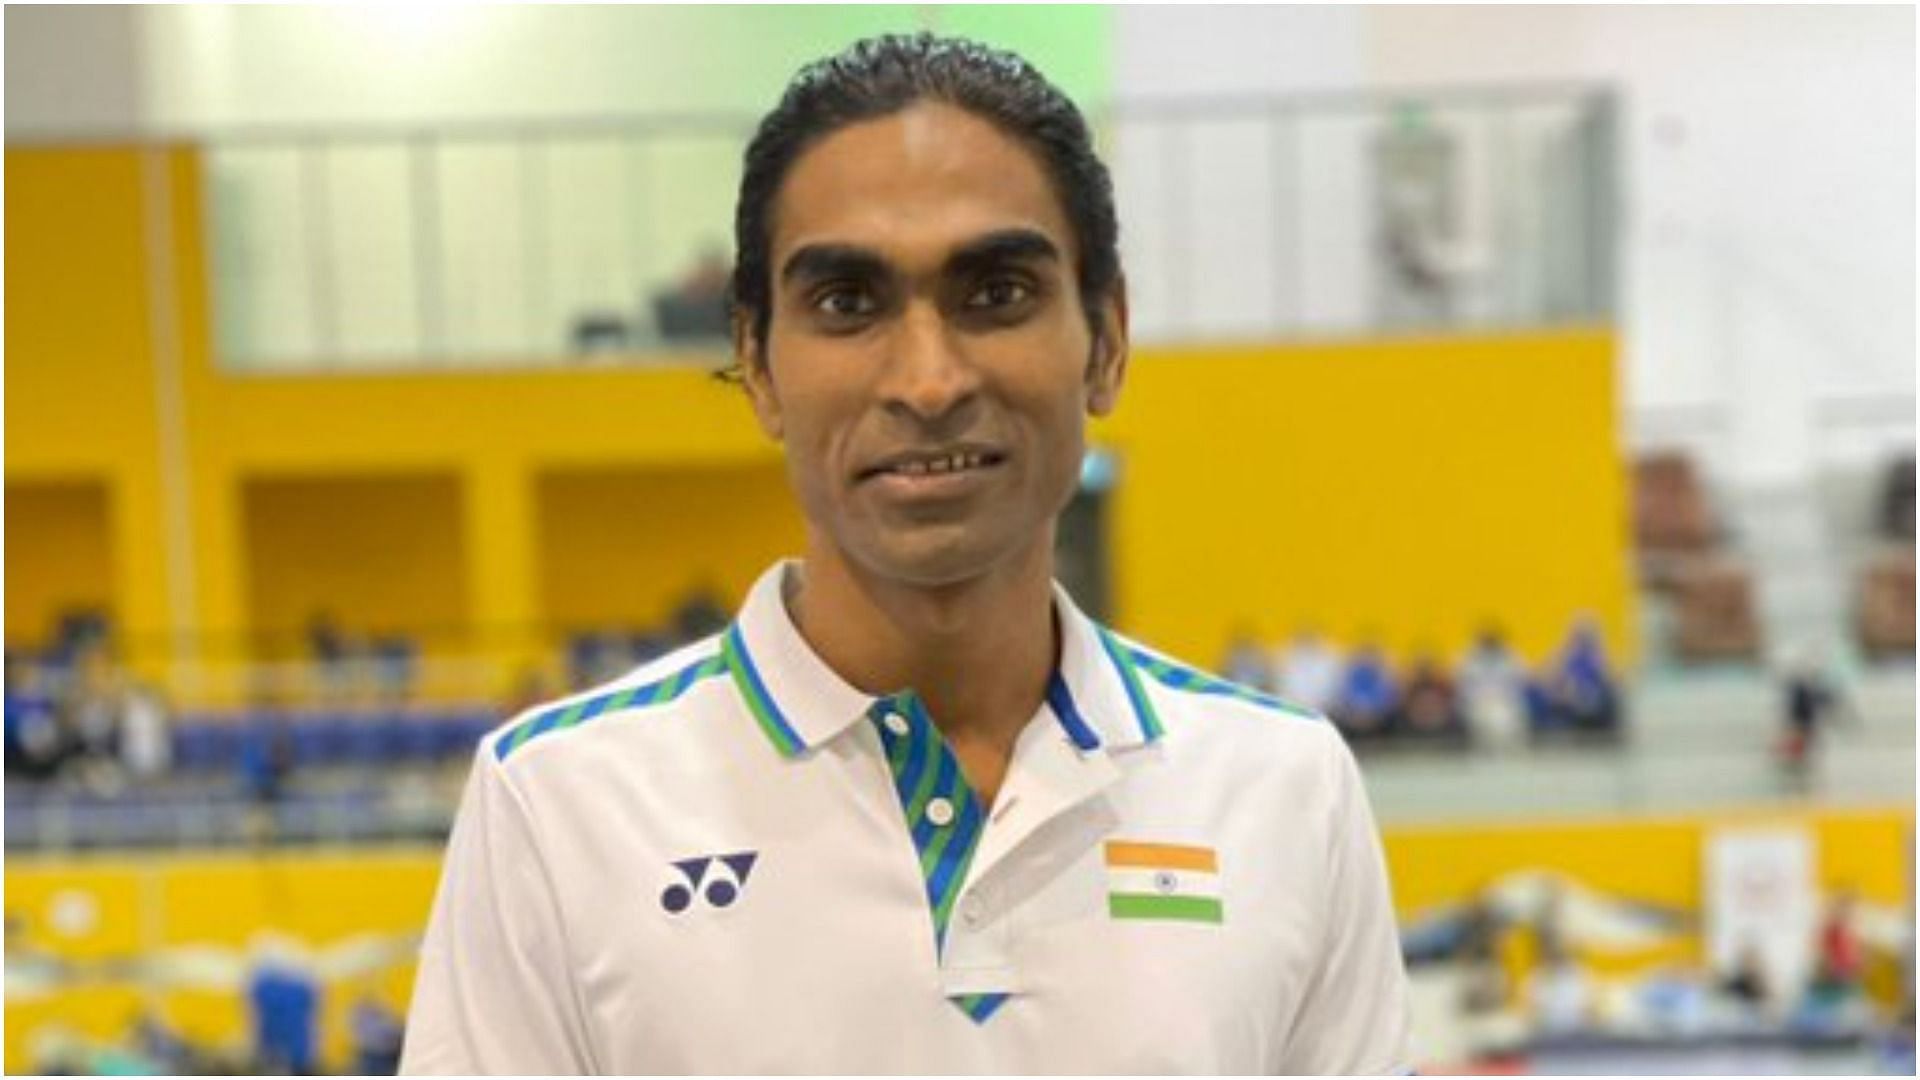 Bahrain Para Badminton International 2022: Pramod Bhagat strikes double gold (Pic Credit: Paralympics India)